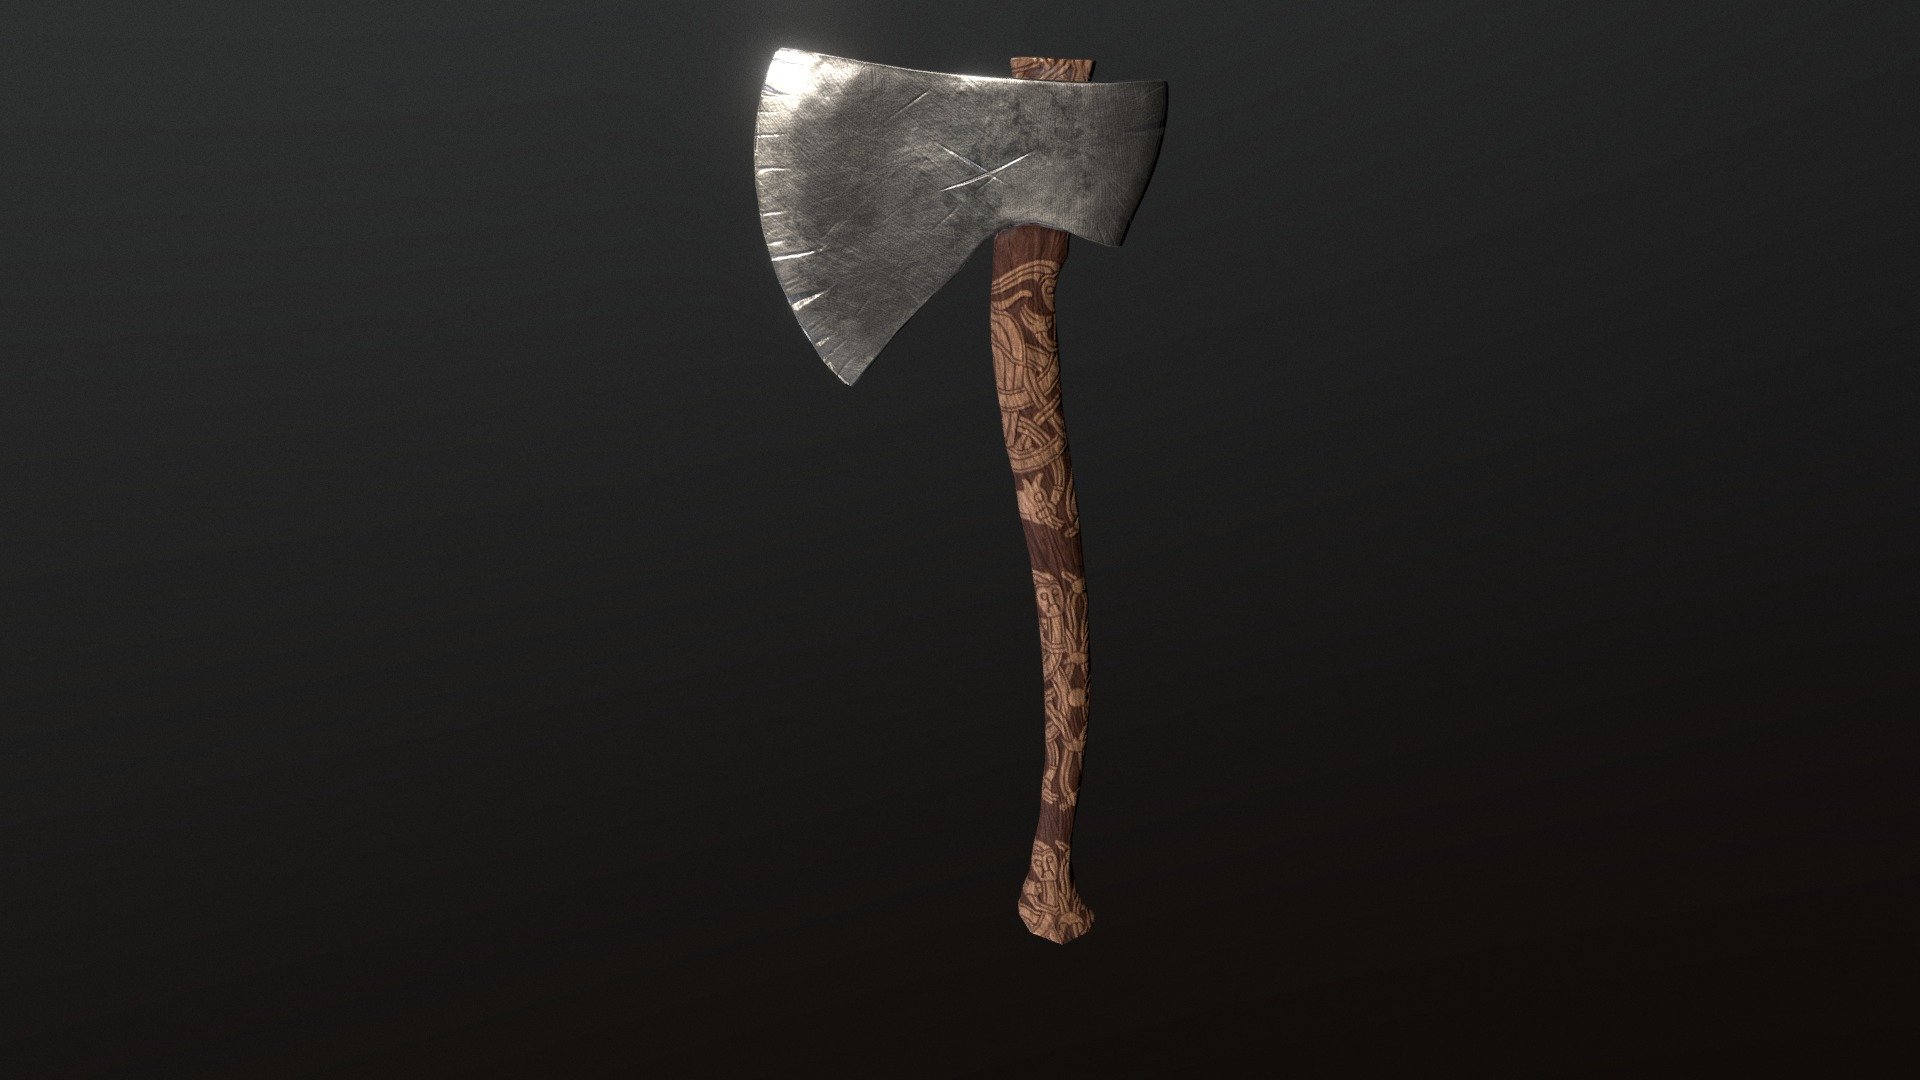 The viking axe